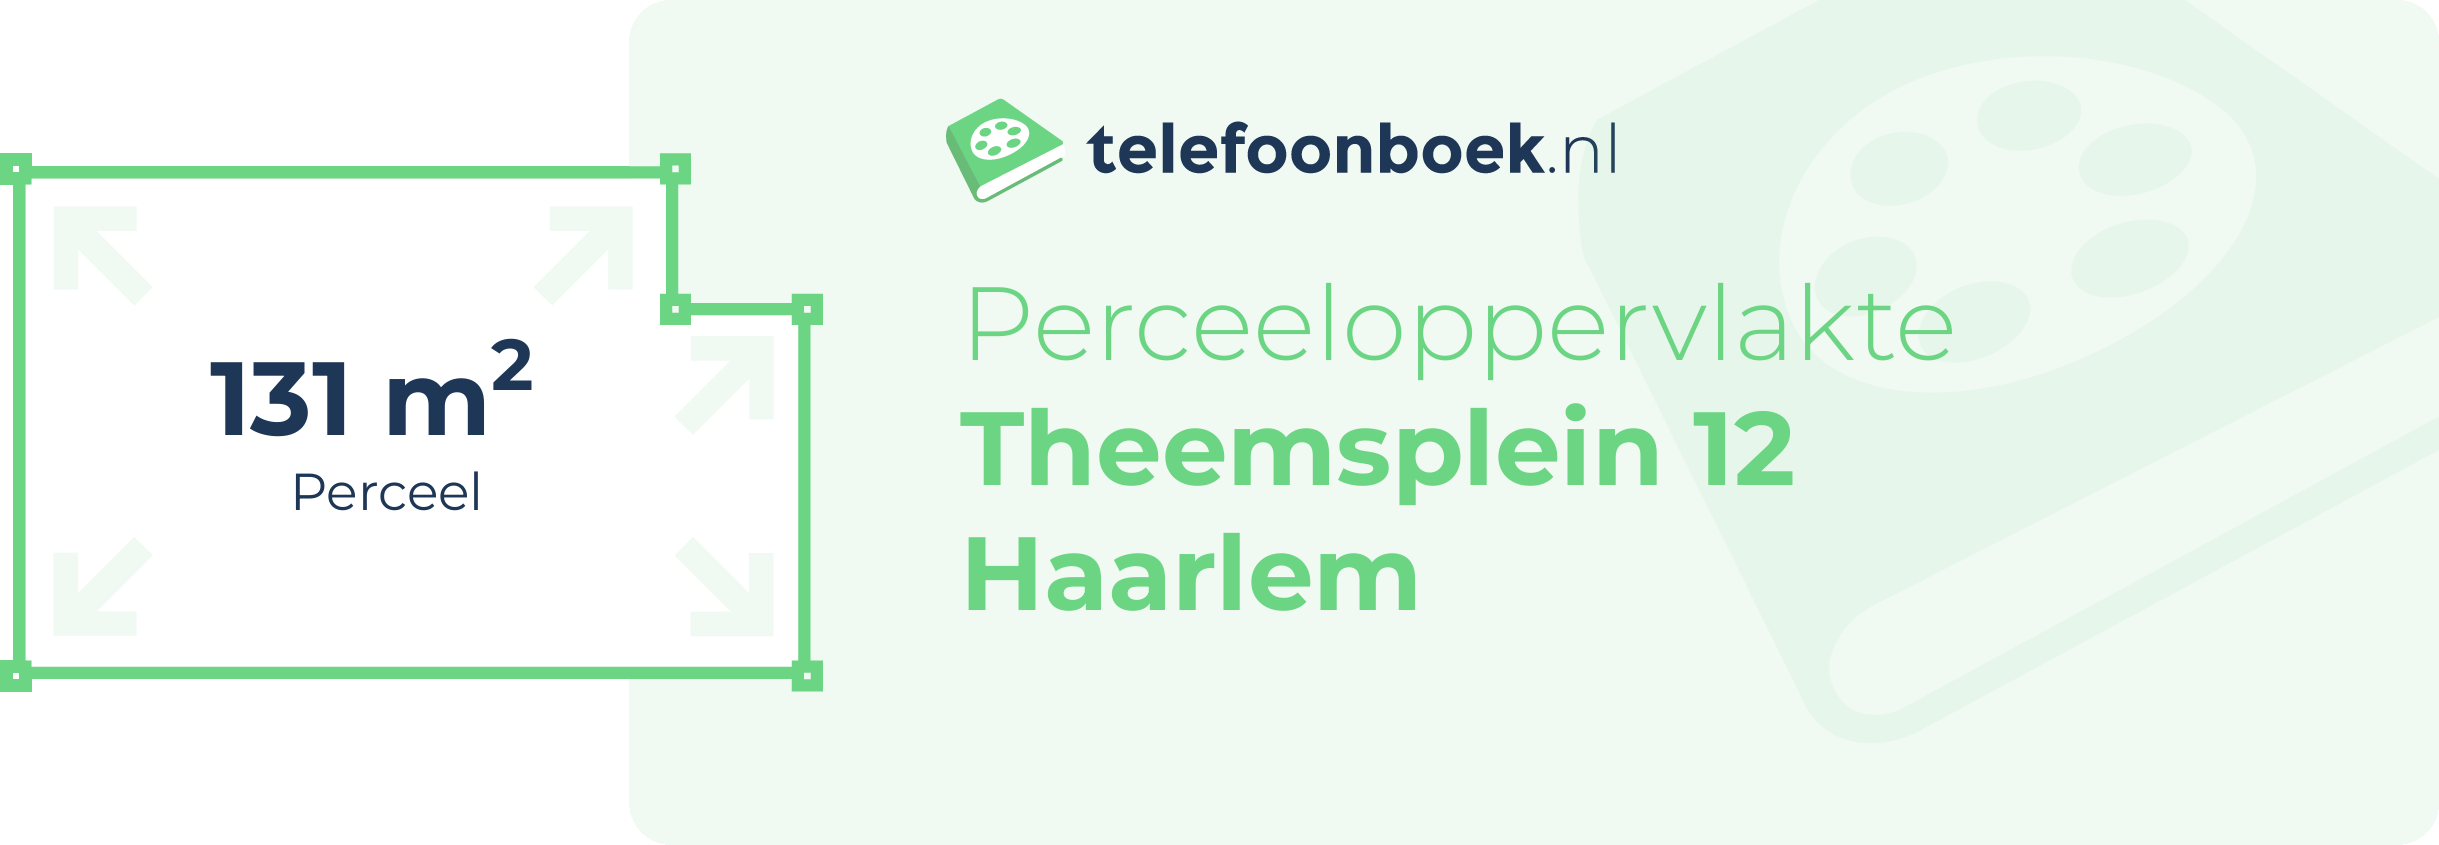 Perceeloppervlakte Theemsplein 12 Haarlem